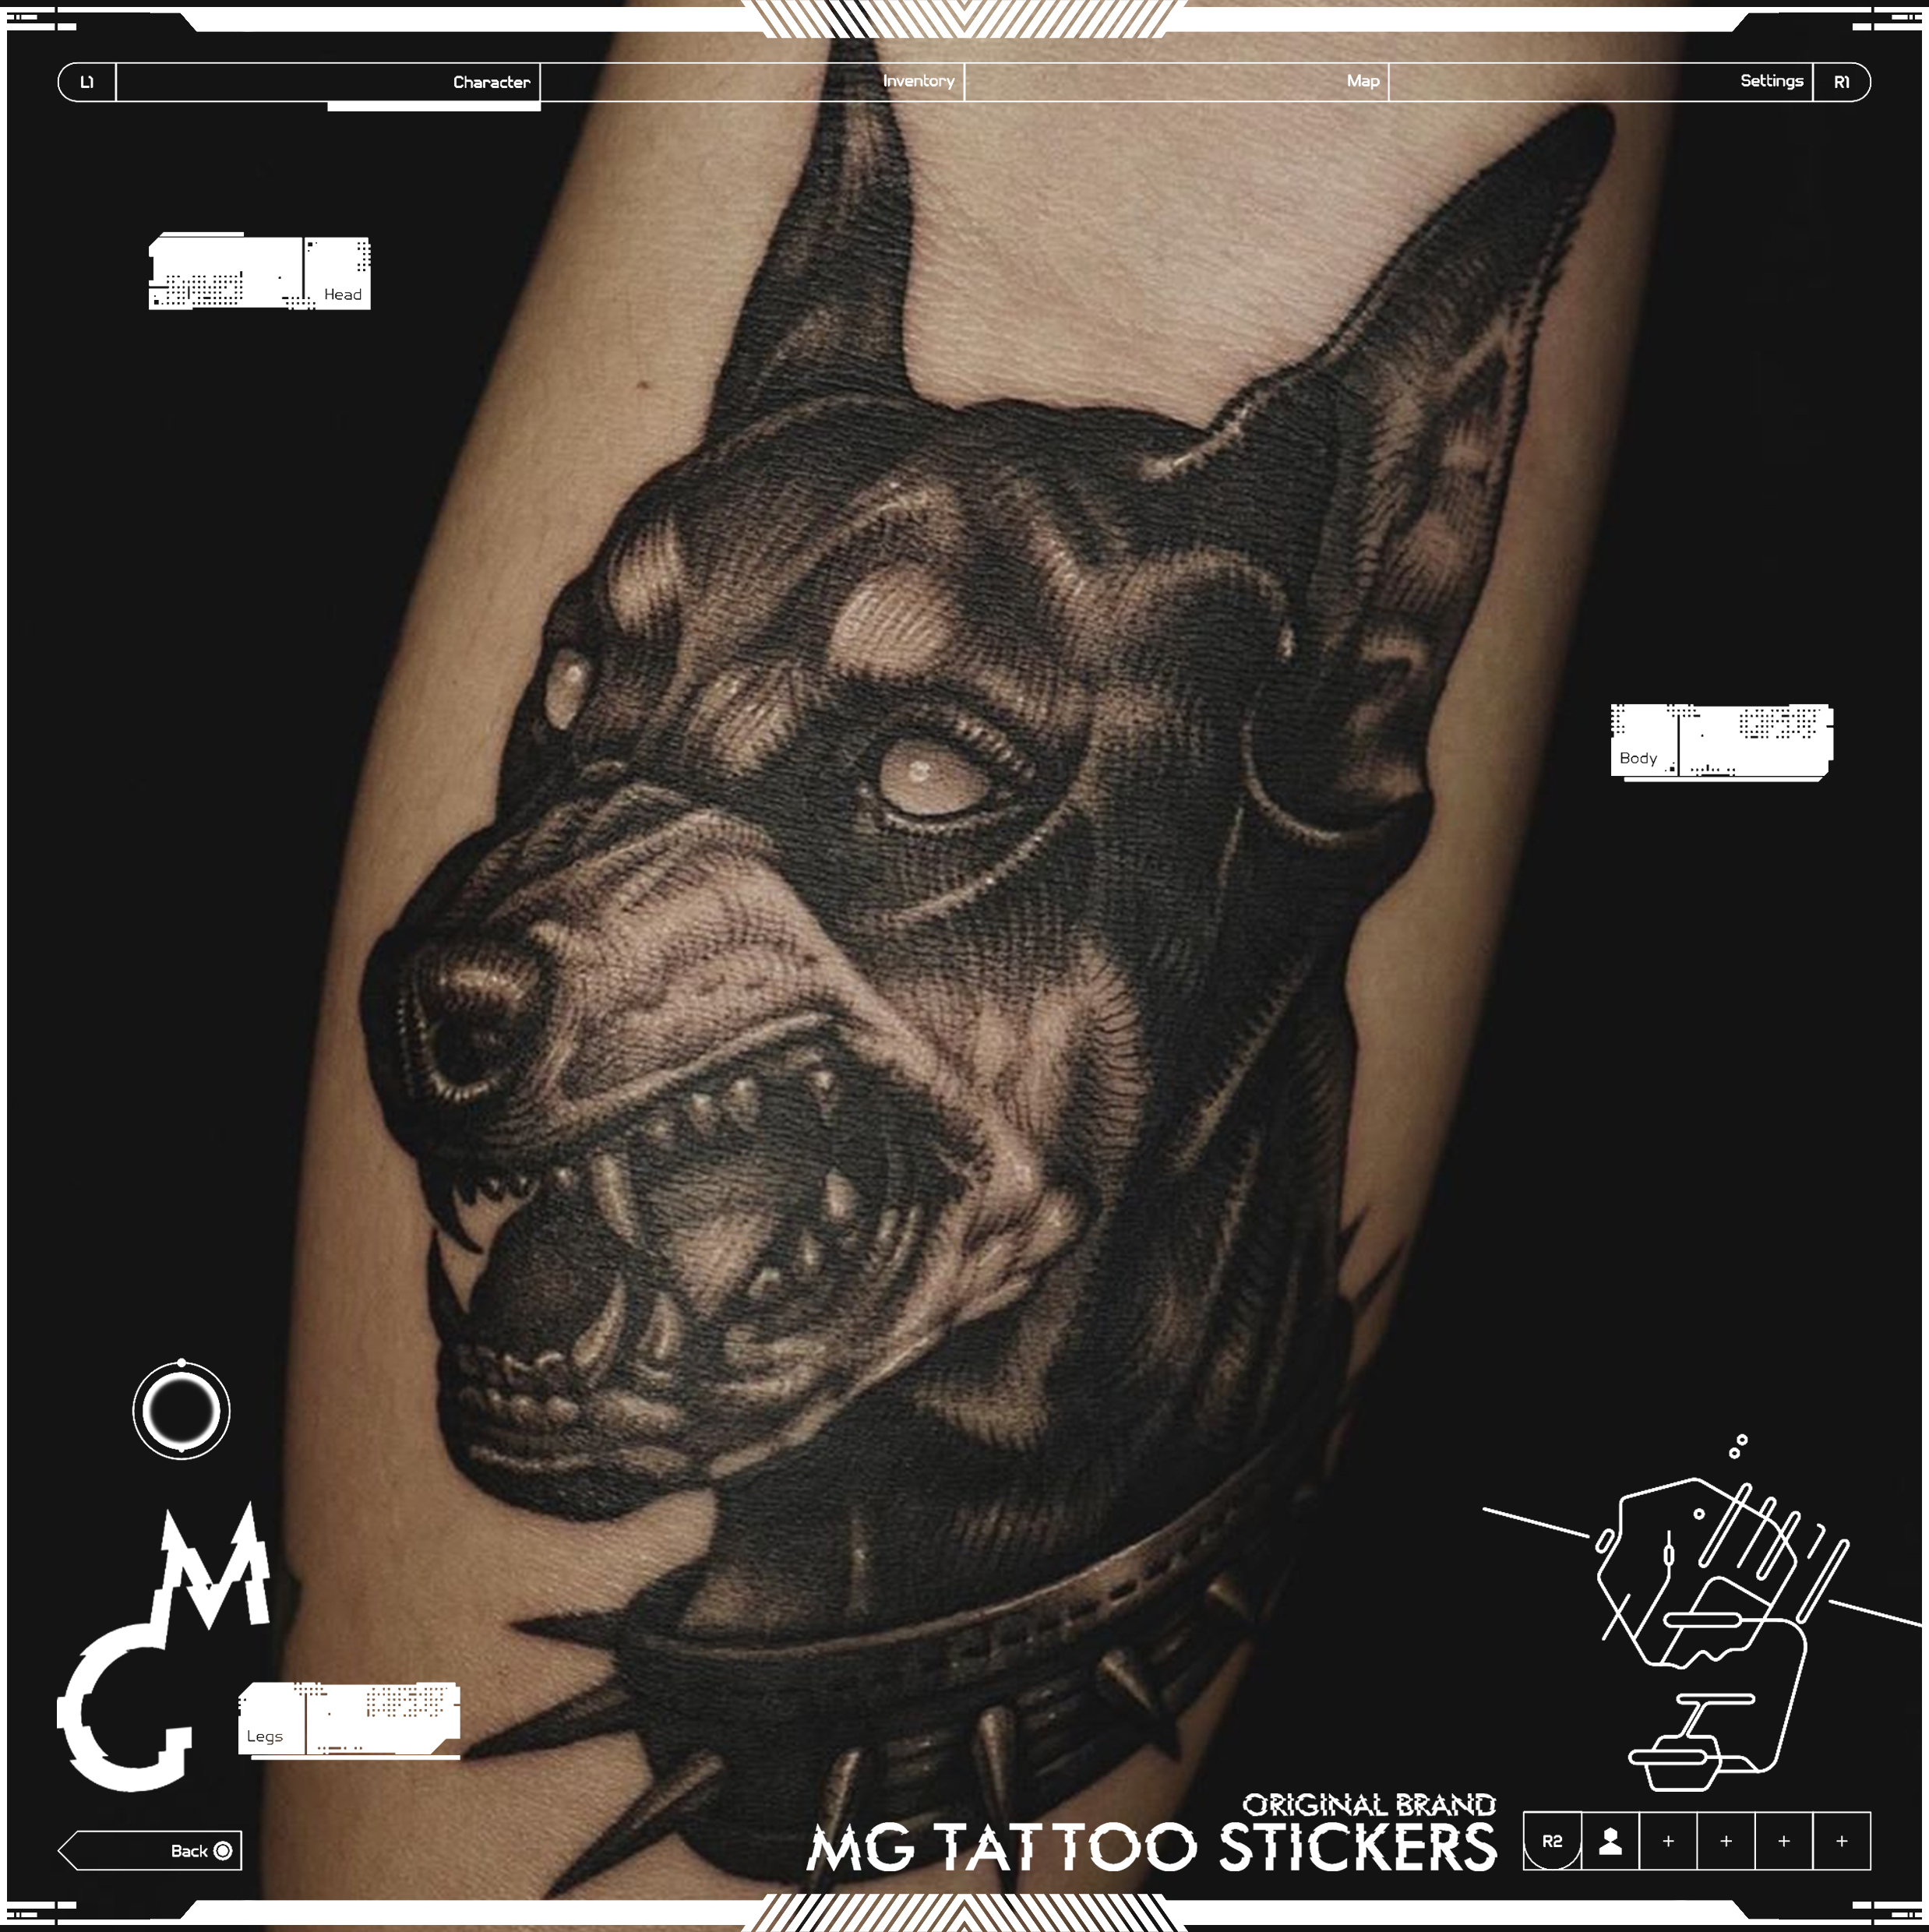 MG tattoo 恶犬 暗黑朋克个性另类霸气狼头图案花臂纹身贴纸男女